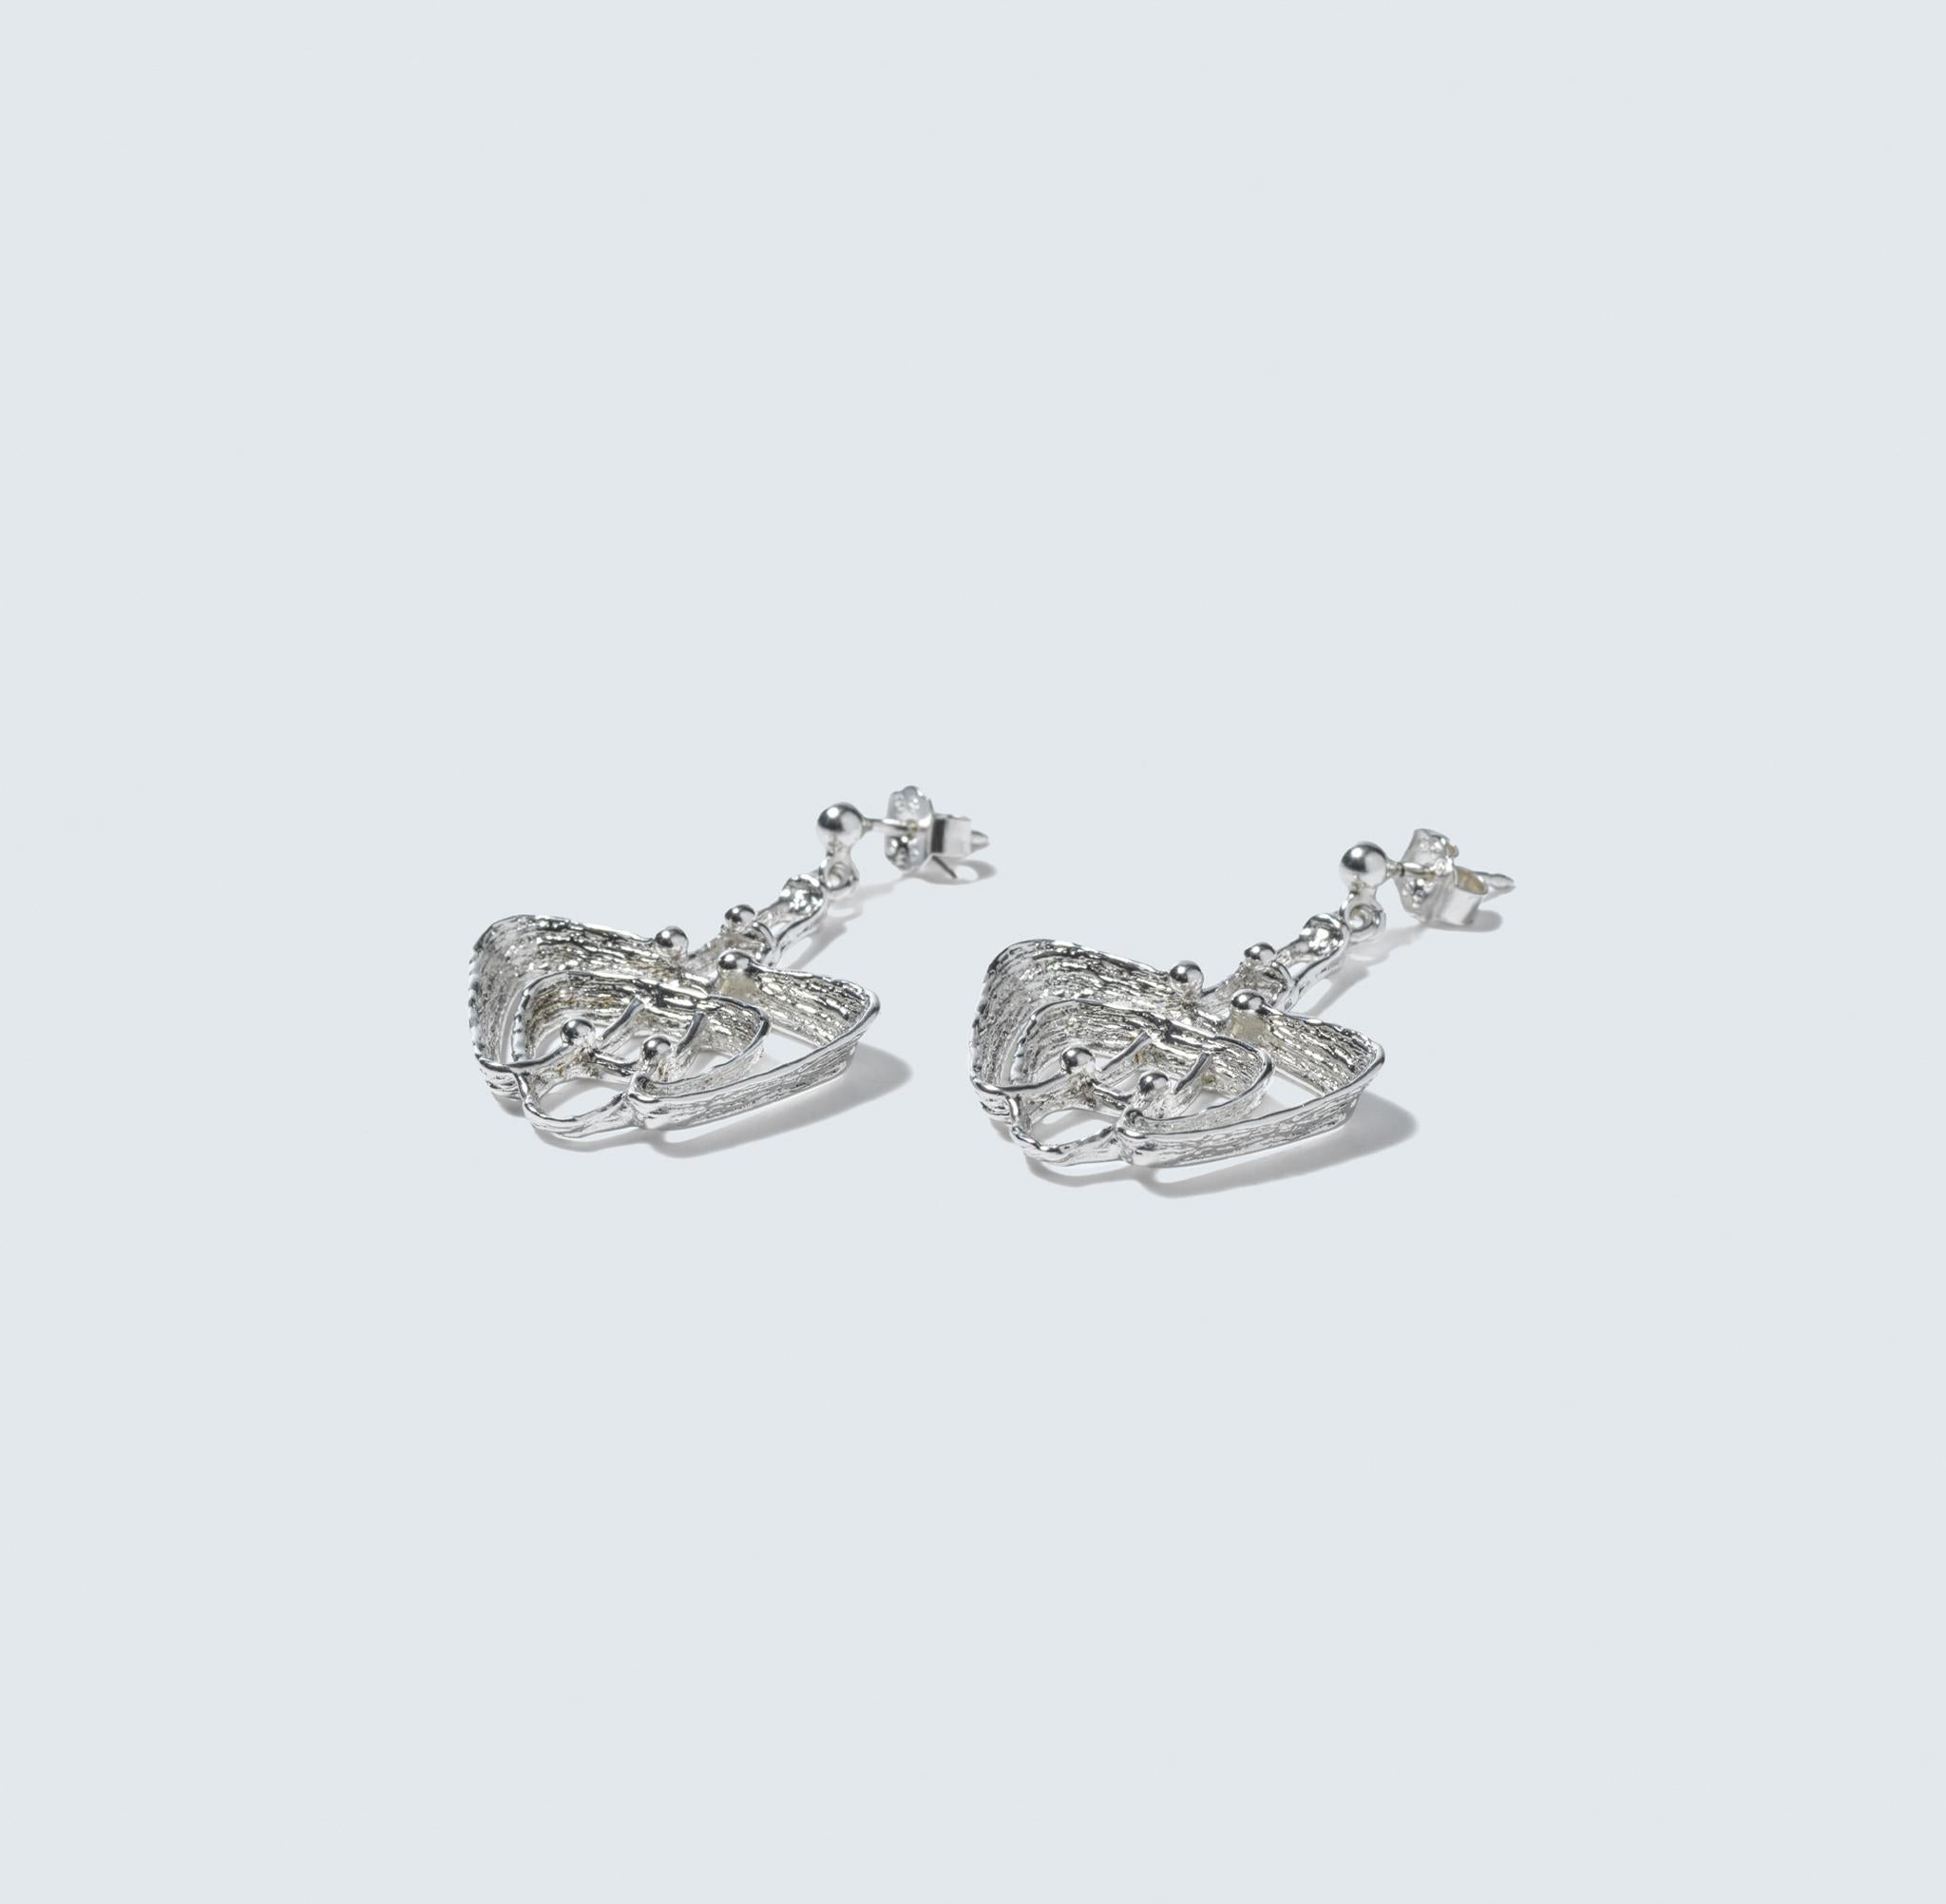 Silver Earrings by Studio Else & Paul Made in 1960s For Sale 2